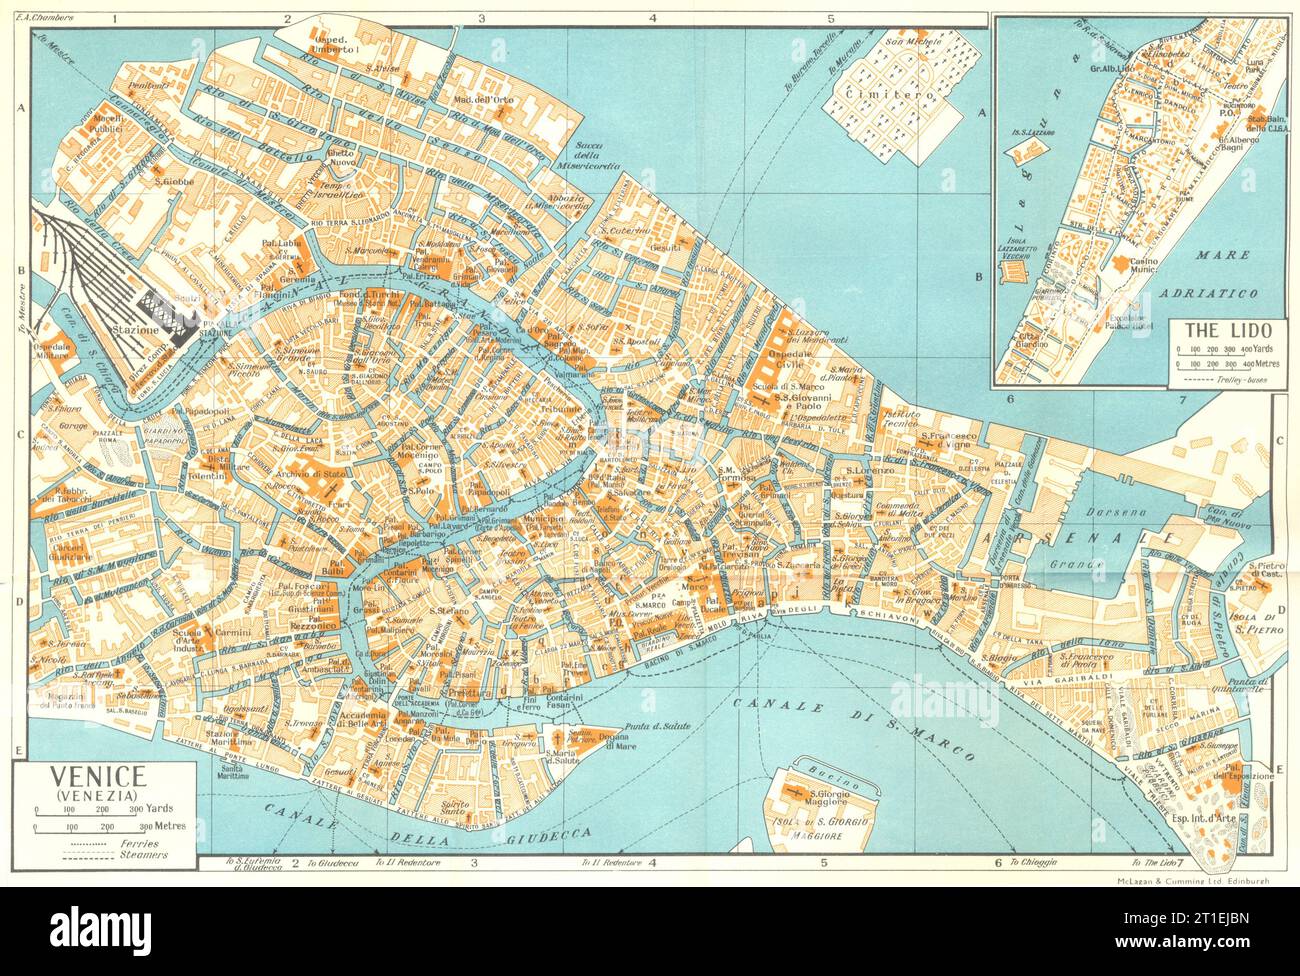 VENICE; THE LIDO town/city plan. Venezia. Italy 1953 old vintage map chart Stock Photo